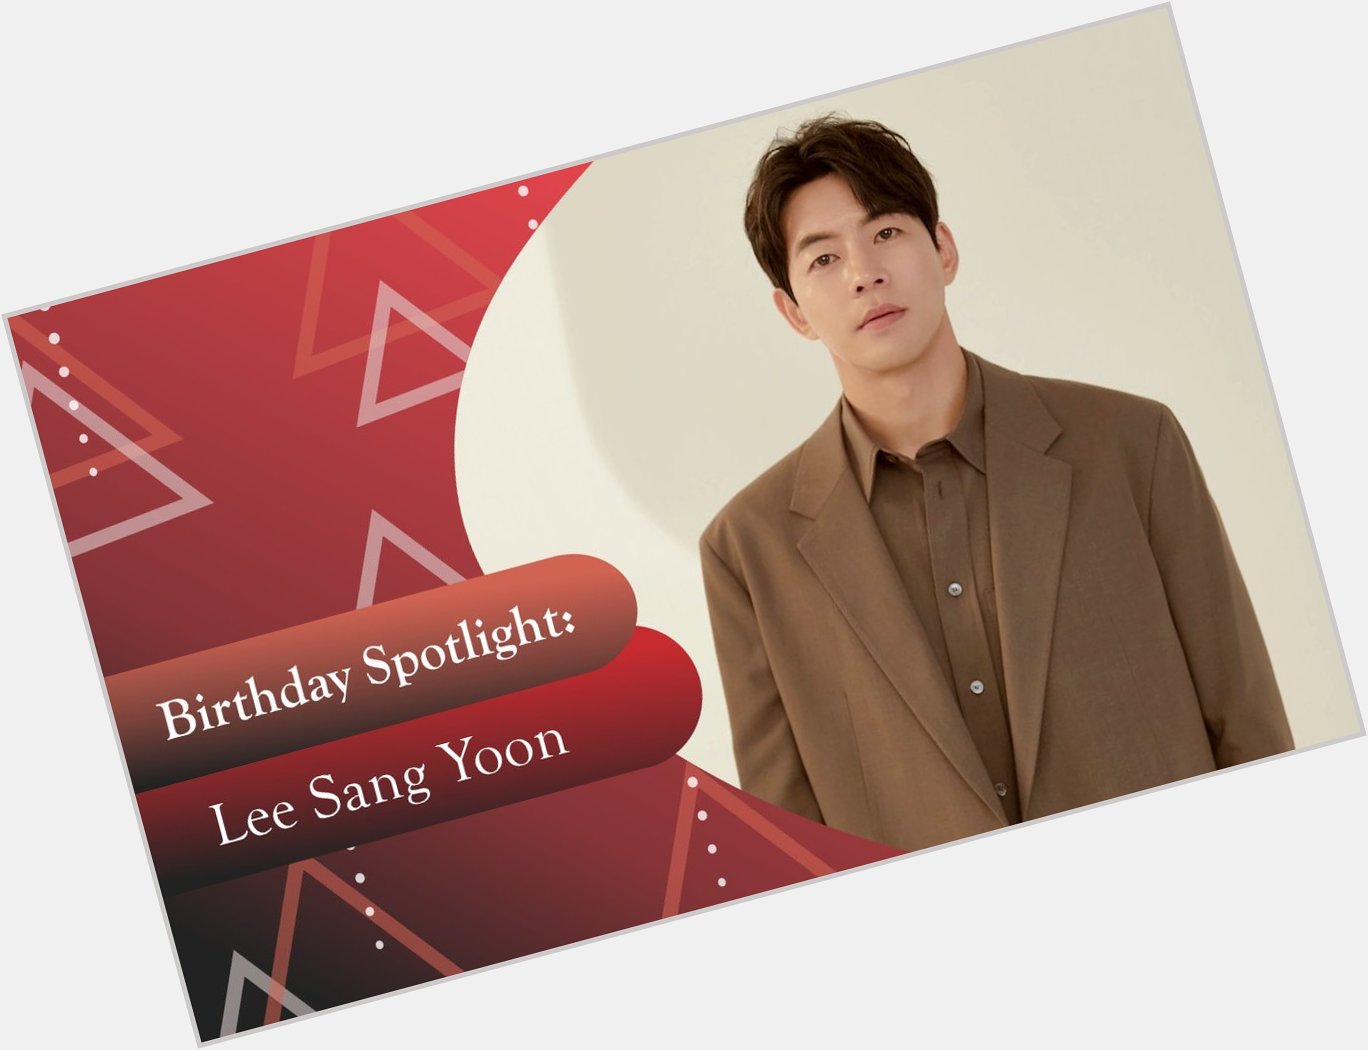 Birthday Spotlight: Happy Lee Sang Yoon Day 